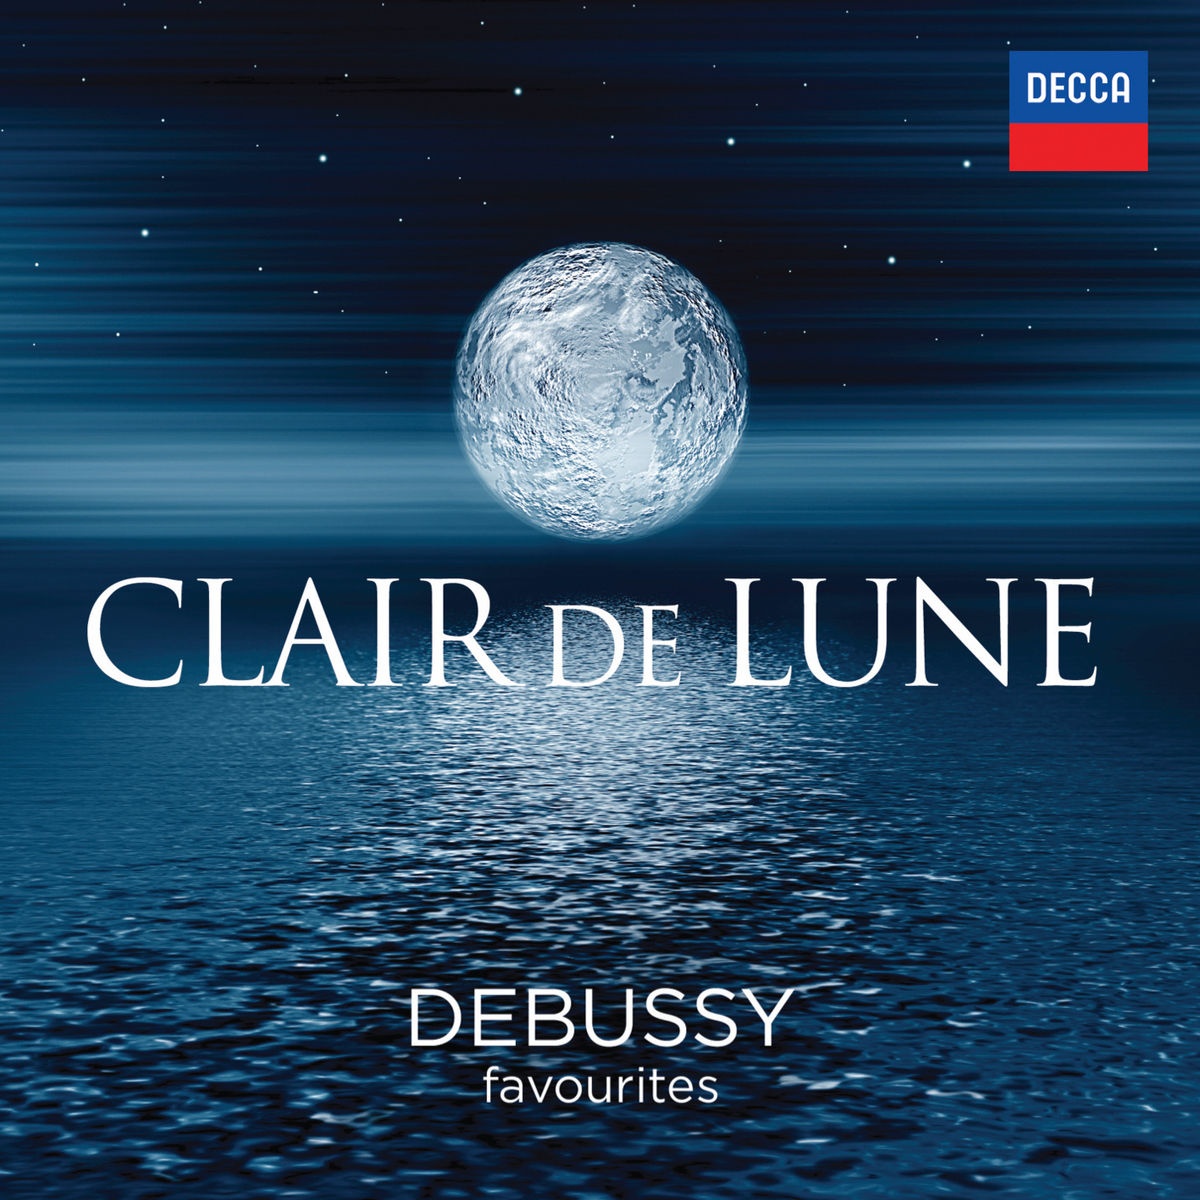 Debussy: Nocturnes  orchestral version, L. 91  3. Sire nes